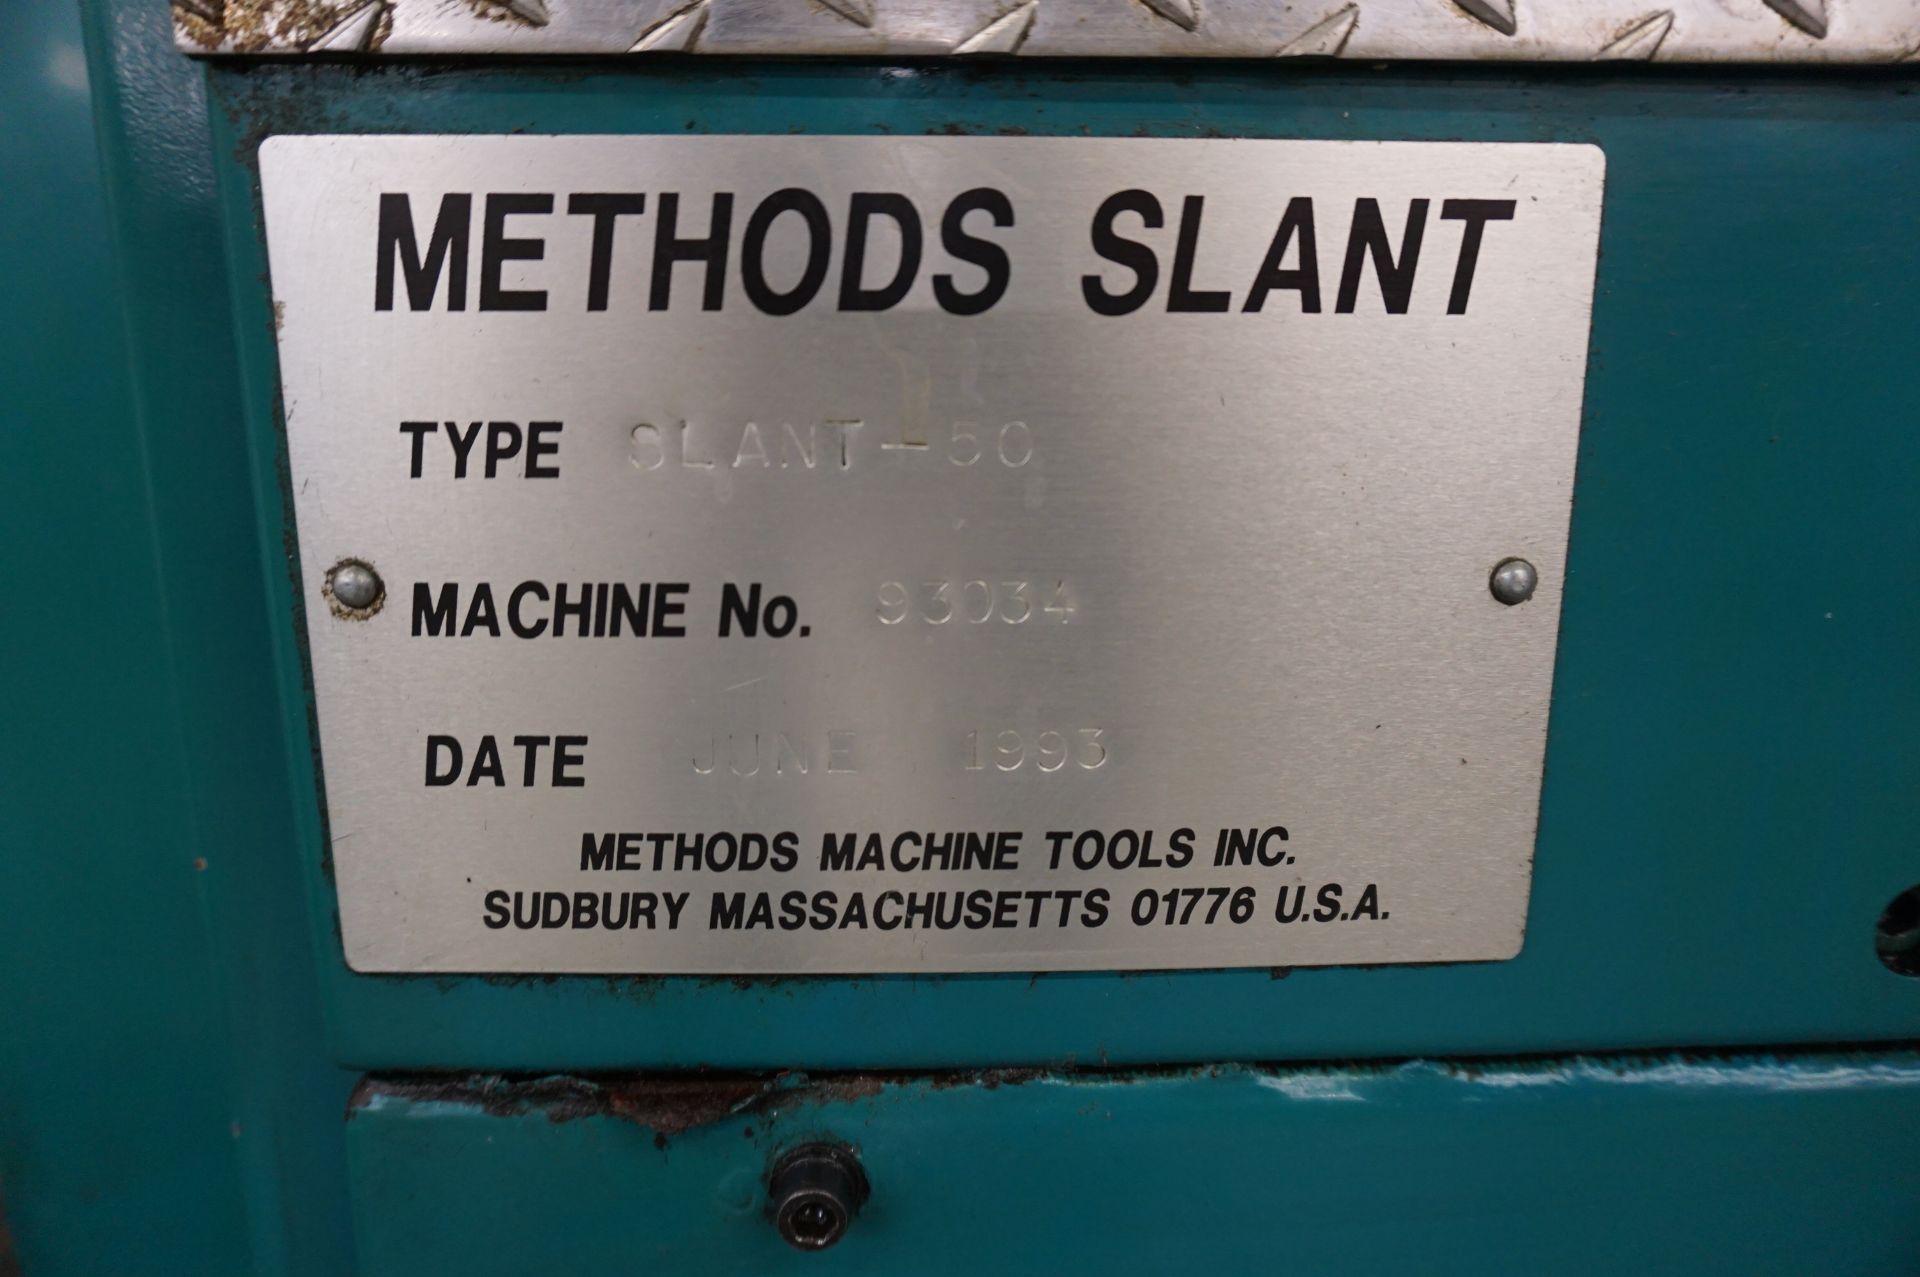 1993 METHODS SLANT 50 CNC TURNING CENTER, S/N 93034, MFG 6/1993, YASNAC LX-3 POWER SUPPLY, S/N - Image 8 of 11